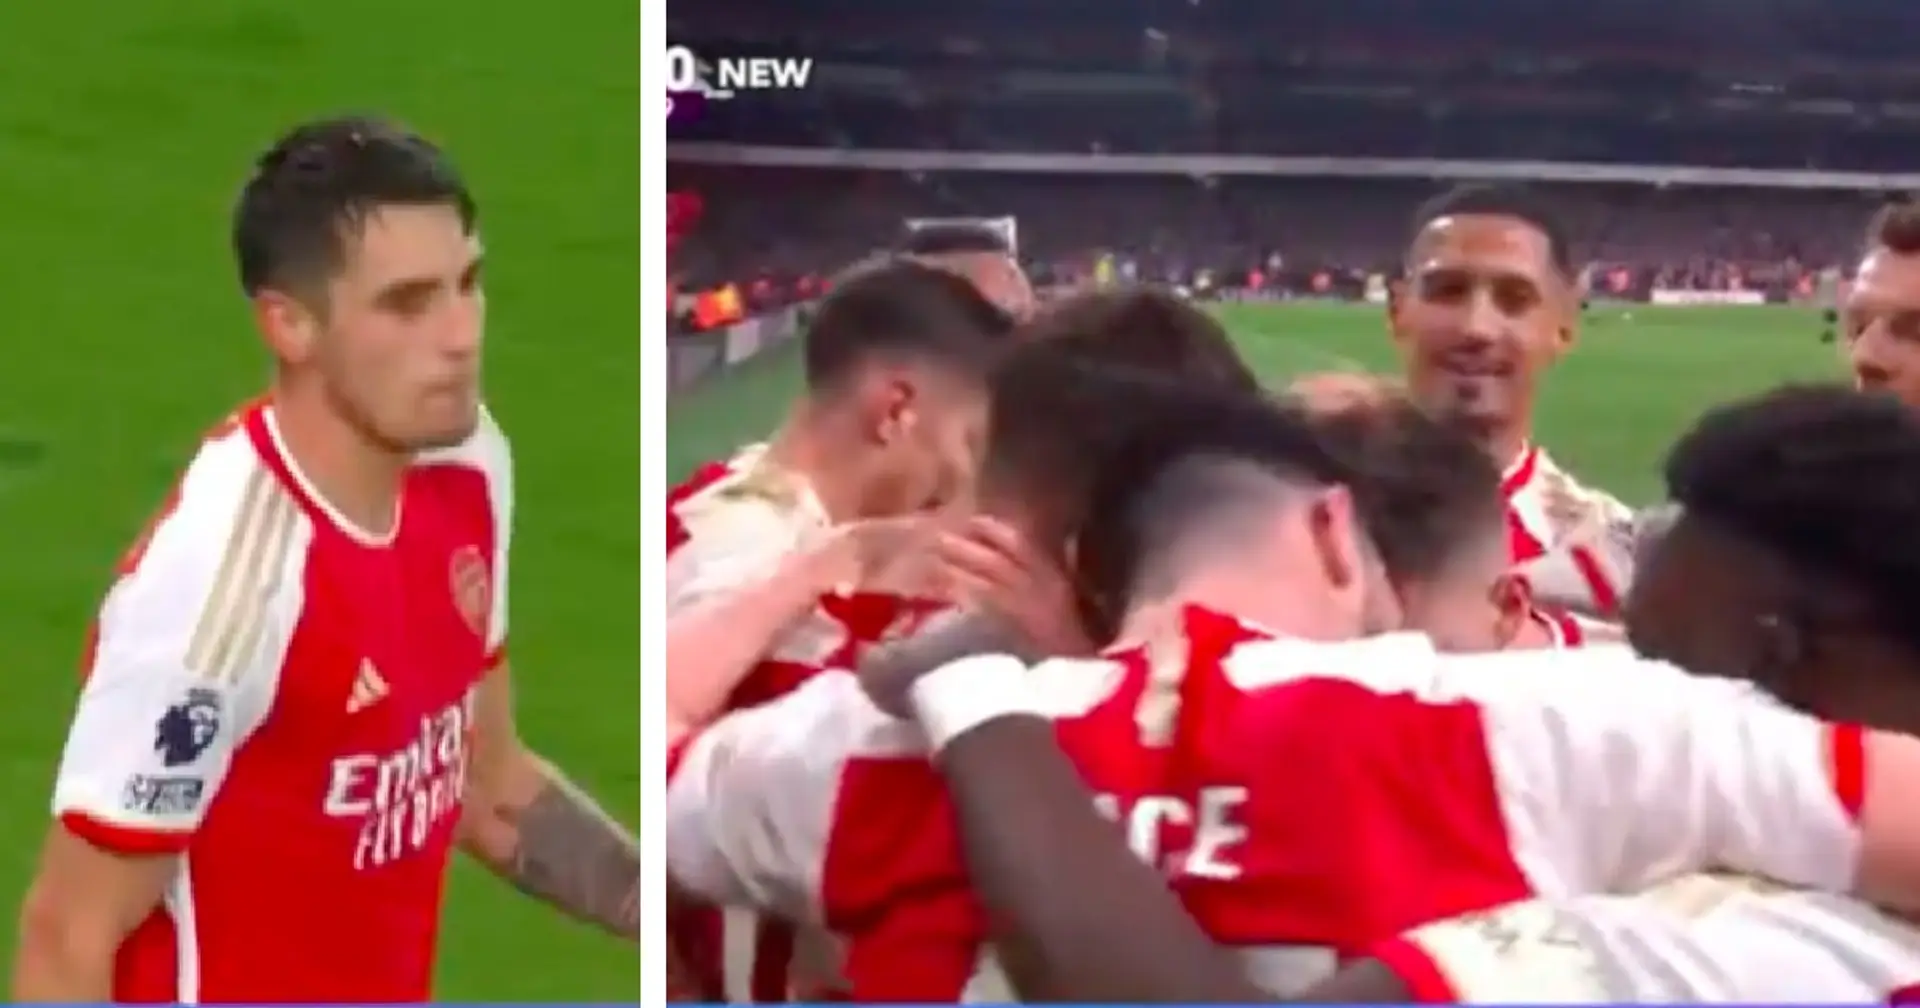 Kiwior scores rare goal for Arsenal - his teammates did something special 